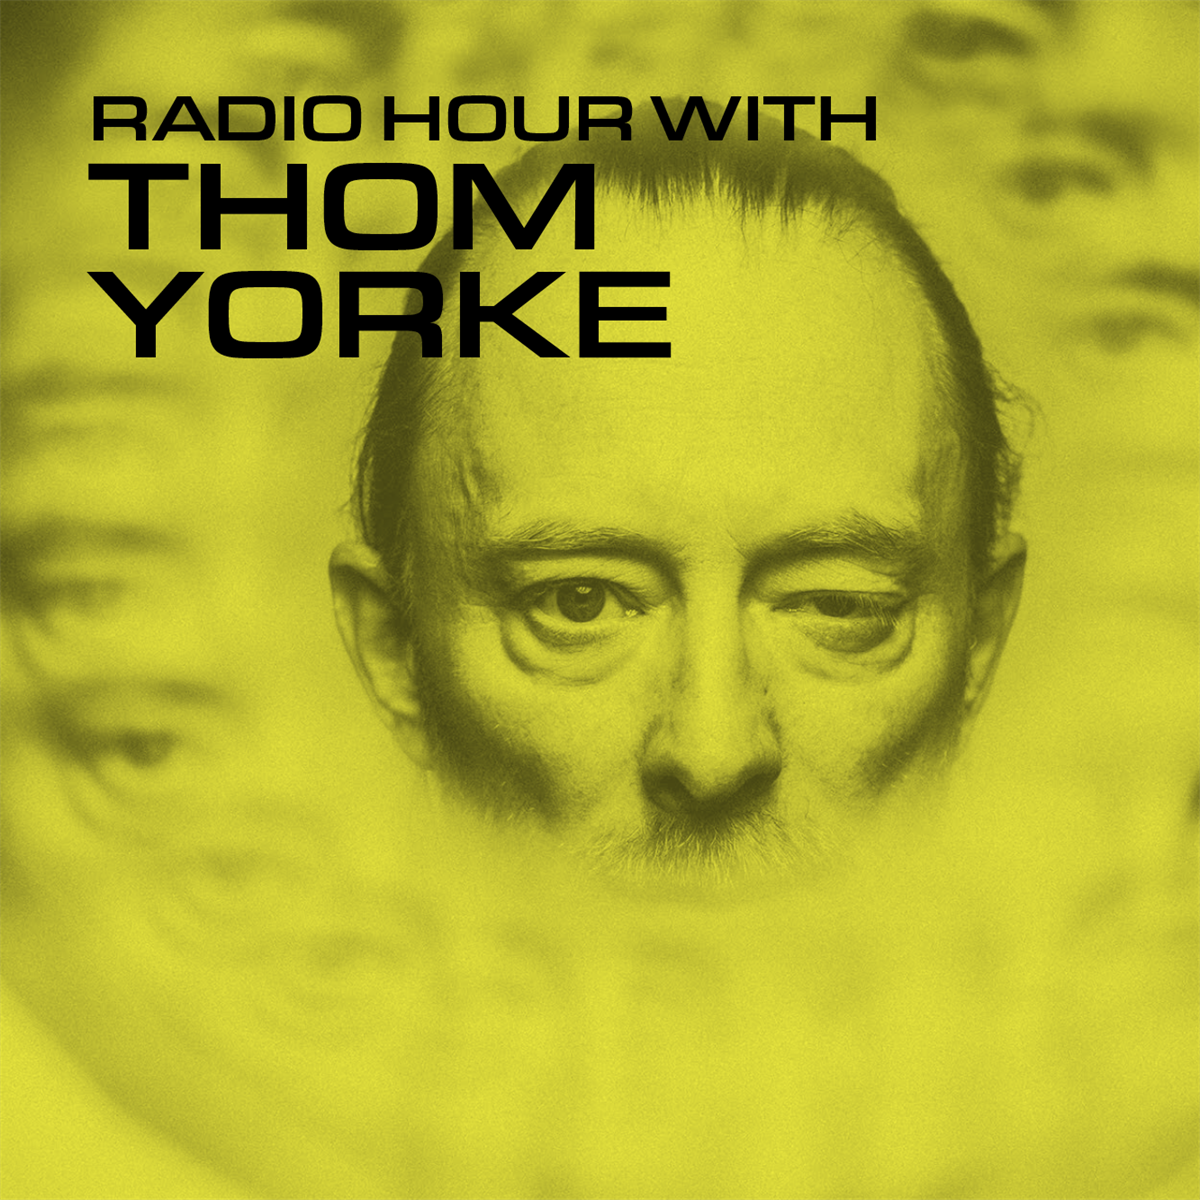 thom yorke radio hour - #3